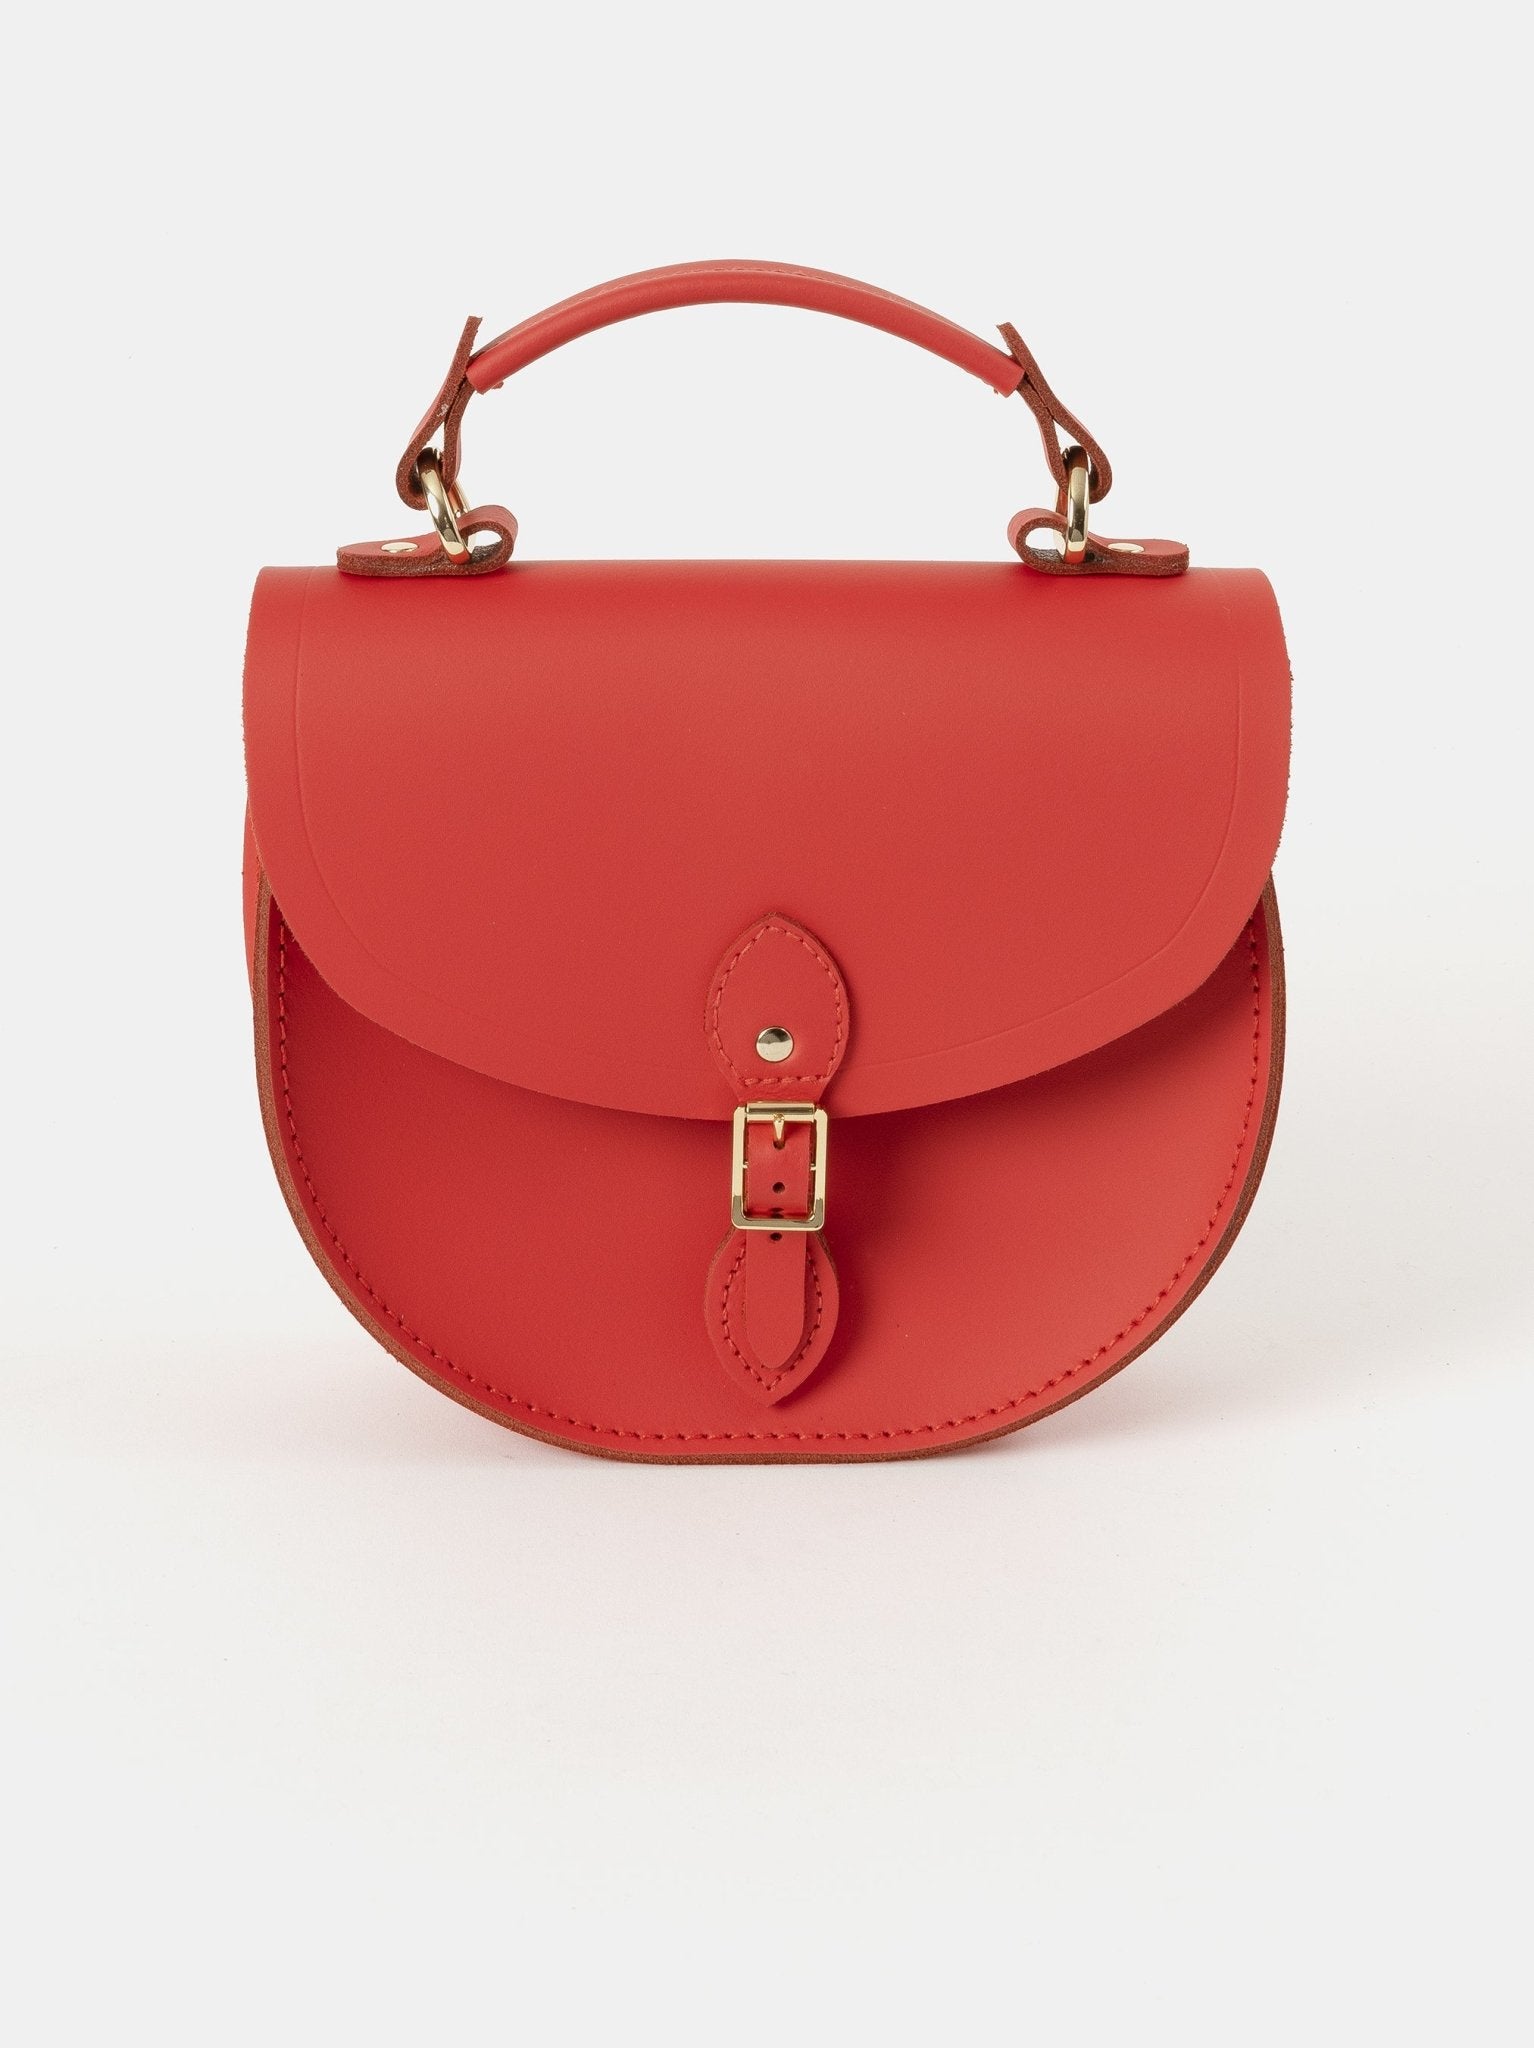 The Cambridge Satchel Co. Women's Red Handbag product